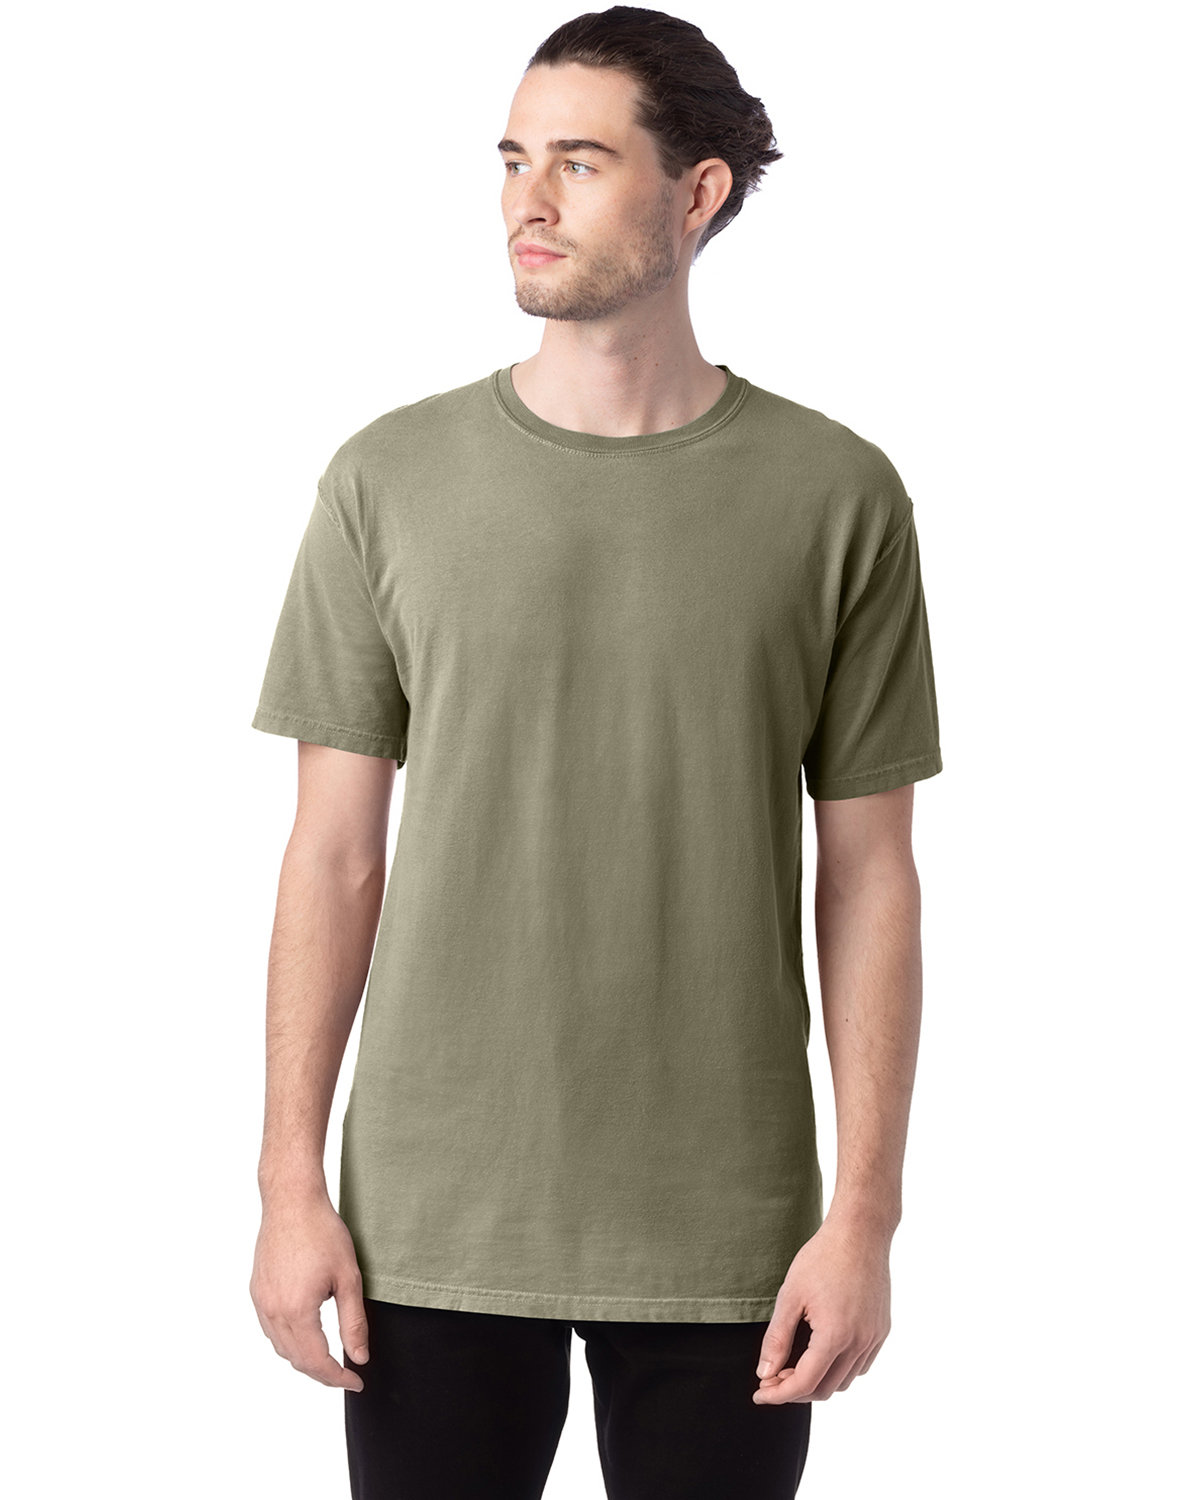 100% | T-Shirt ShirtSpace GDH100 ComfortWash 5.5 Hanes oz., Cotton Ringspun Garment-Dyed by Men\'s |